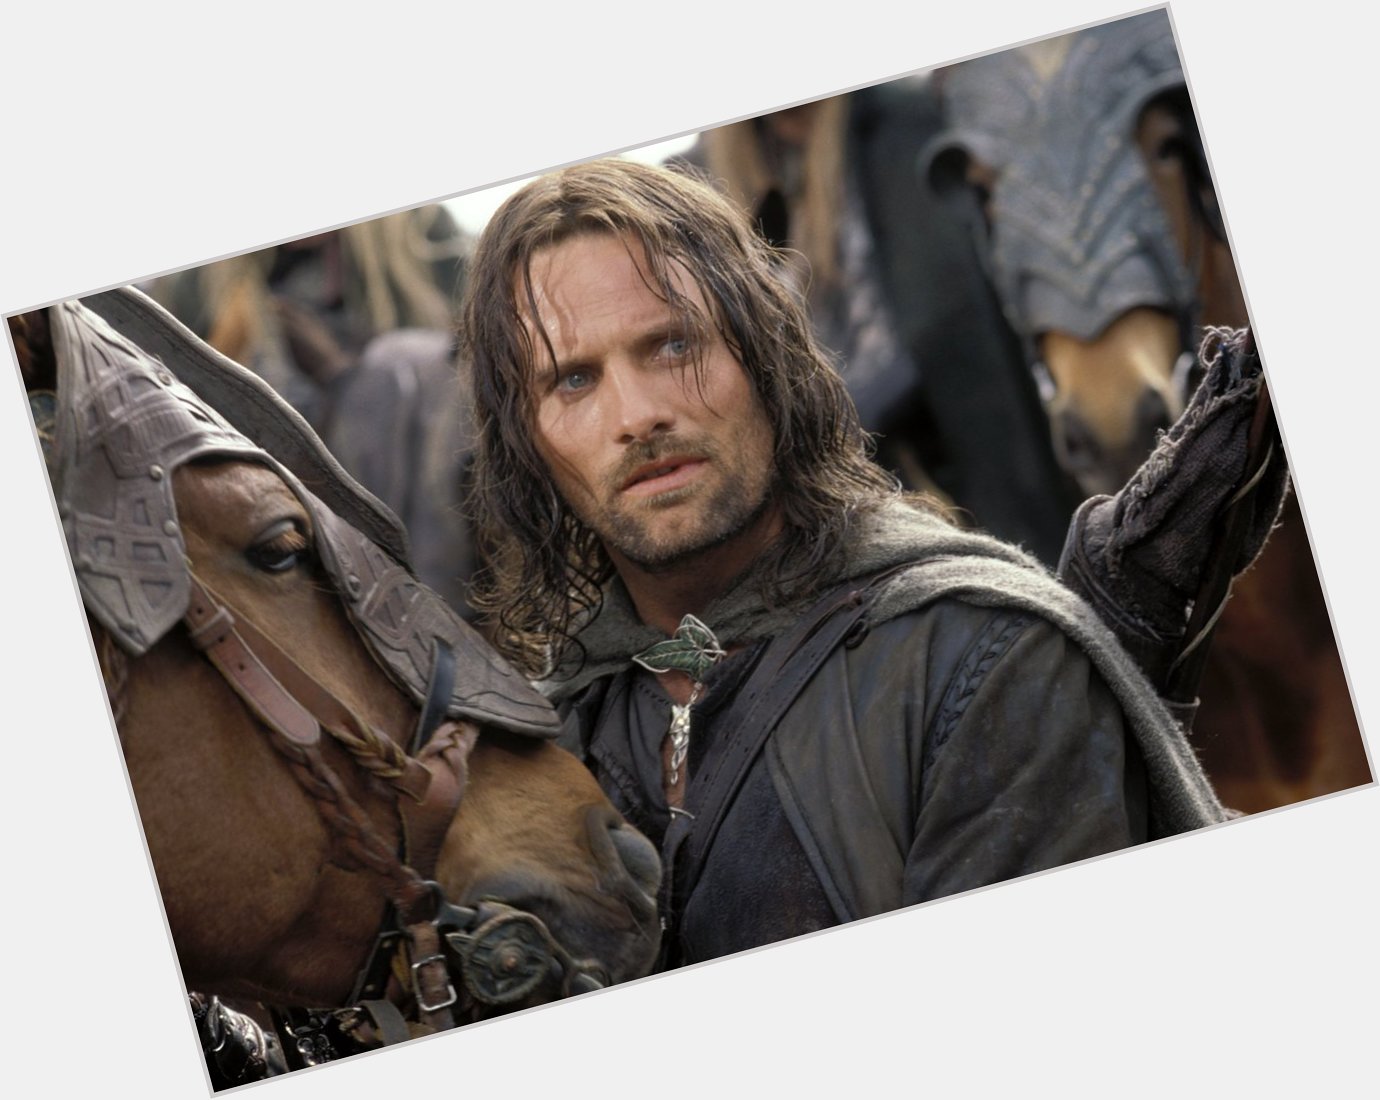 Forever our Aragorn. Happy Birthday, Viggo Mortensen! 